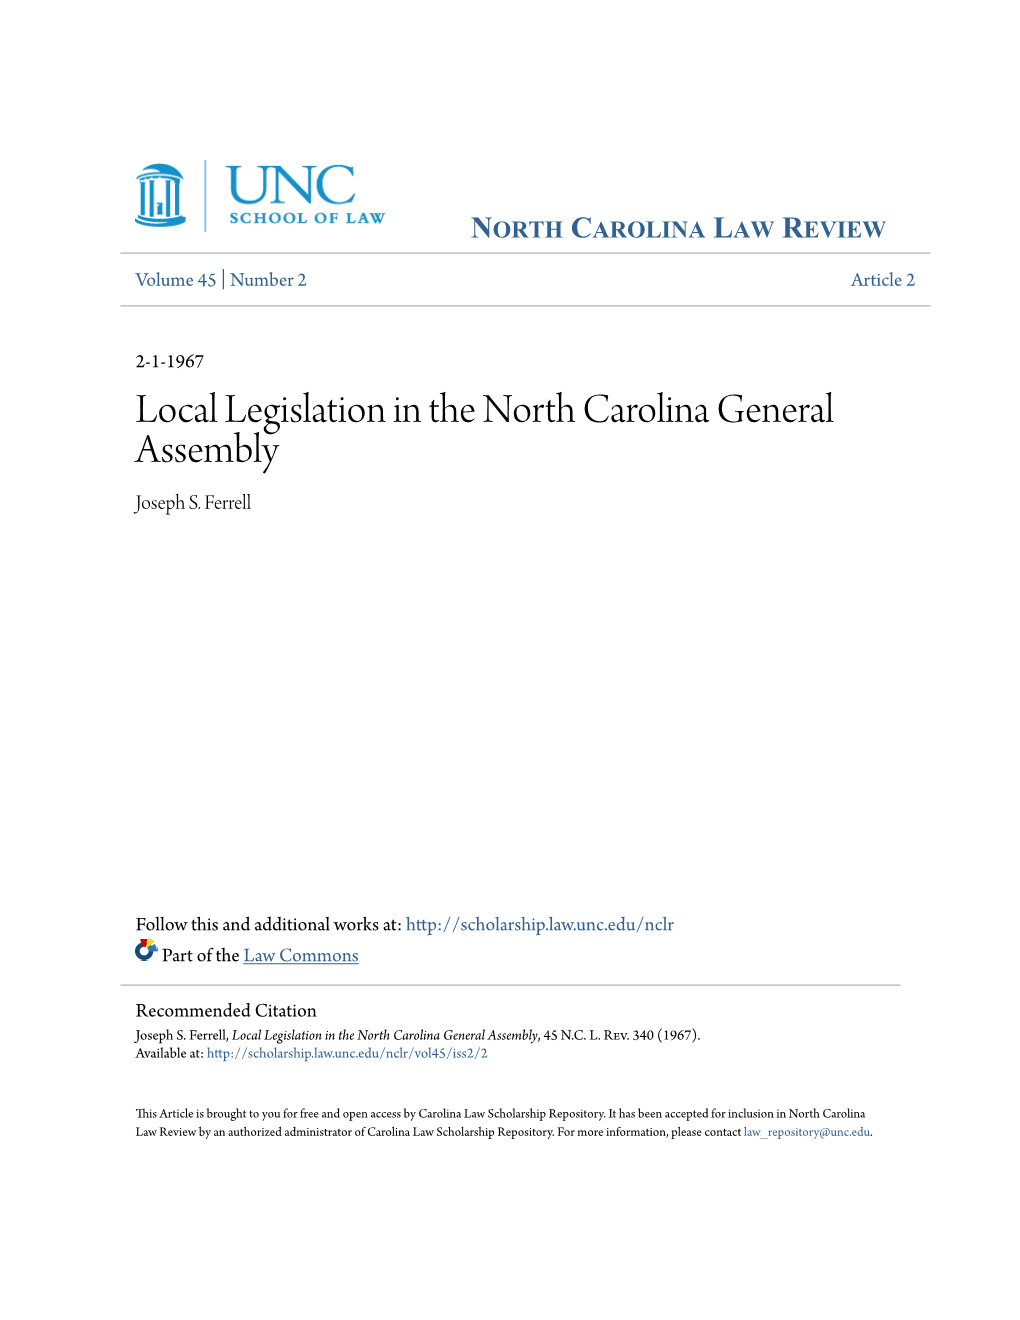 Local Legislation in the North Carolina General Assembly Joseph S